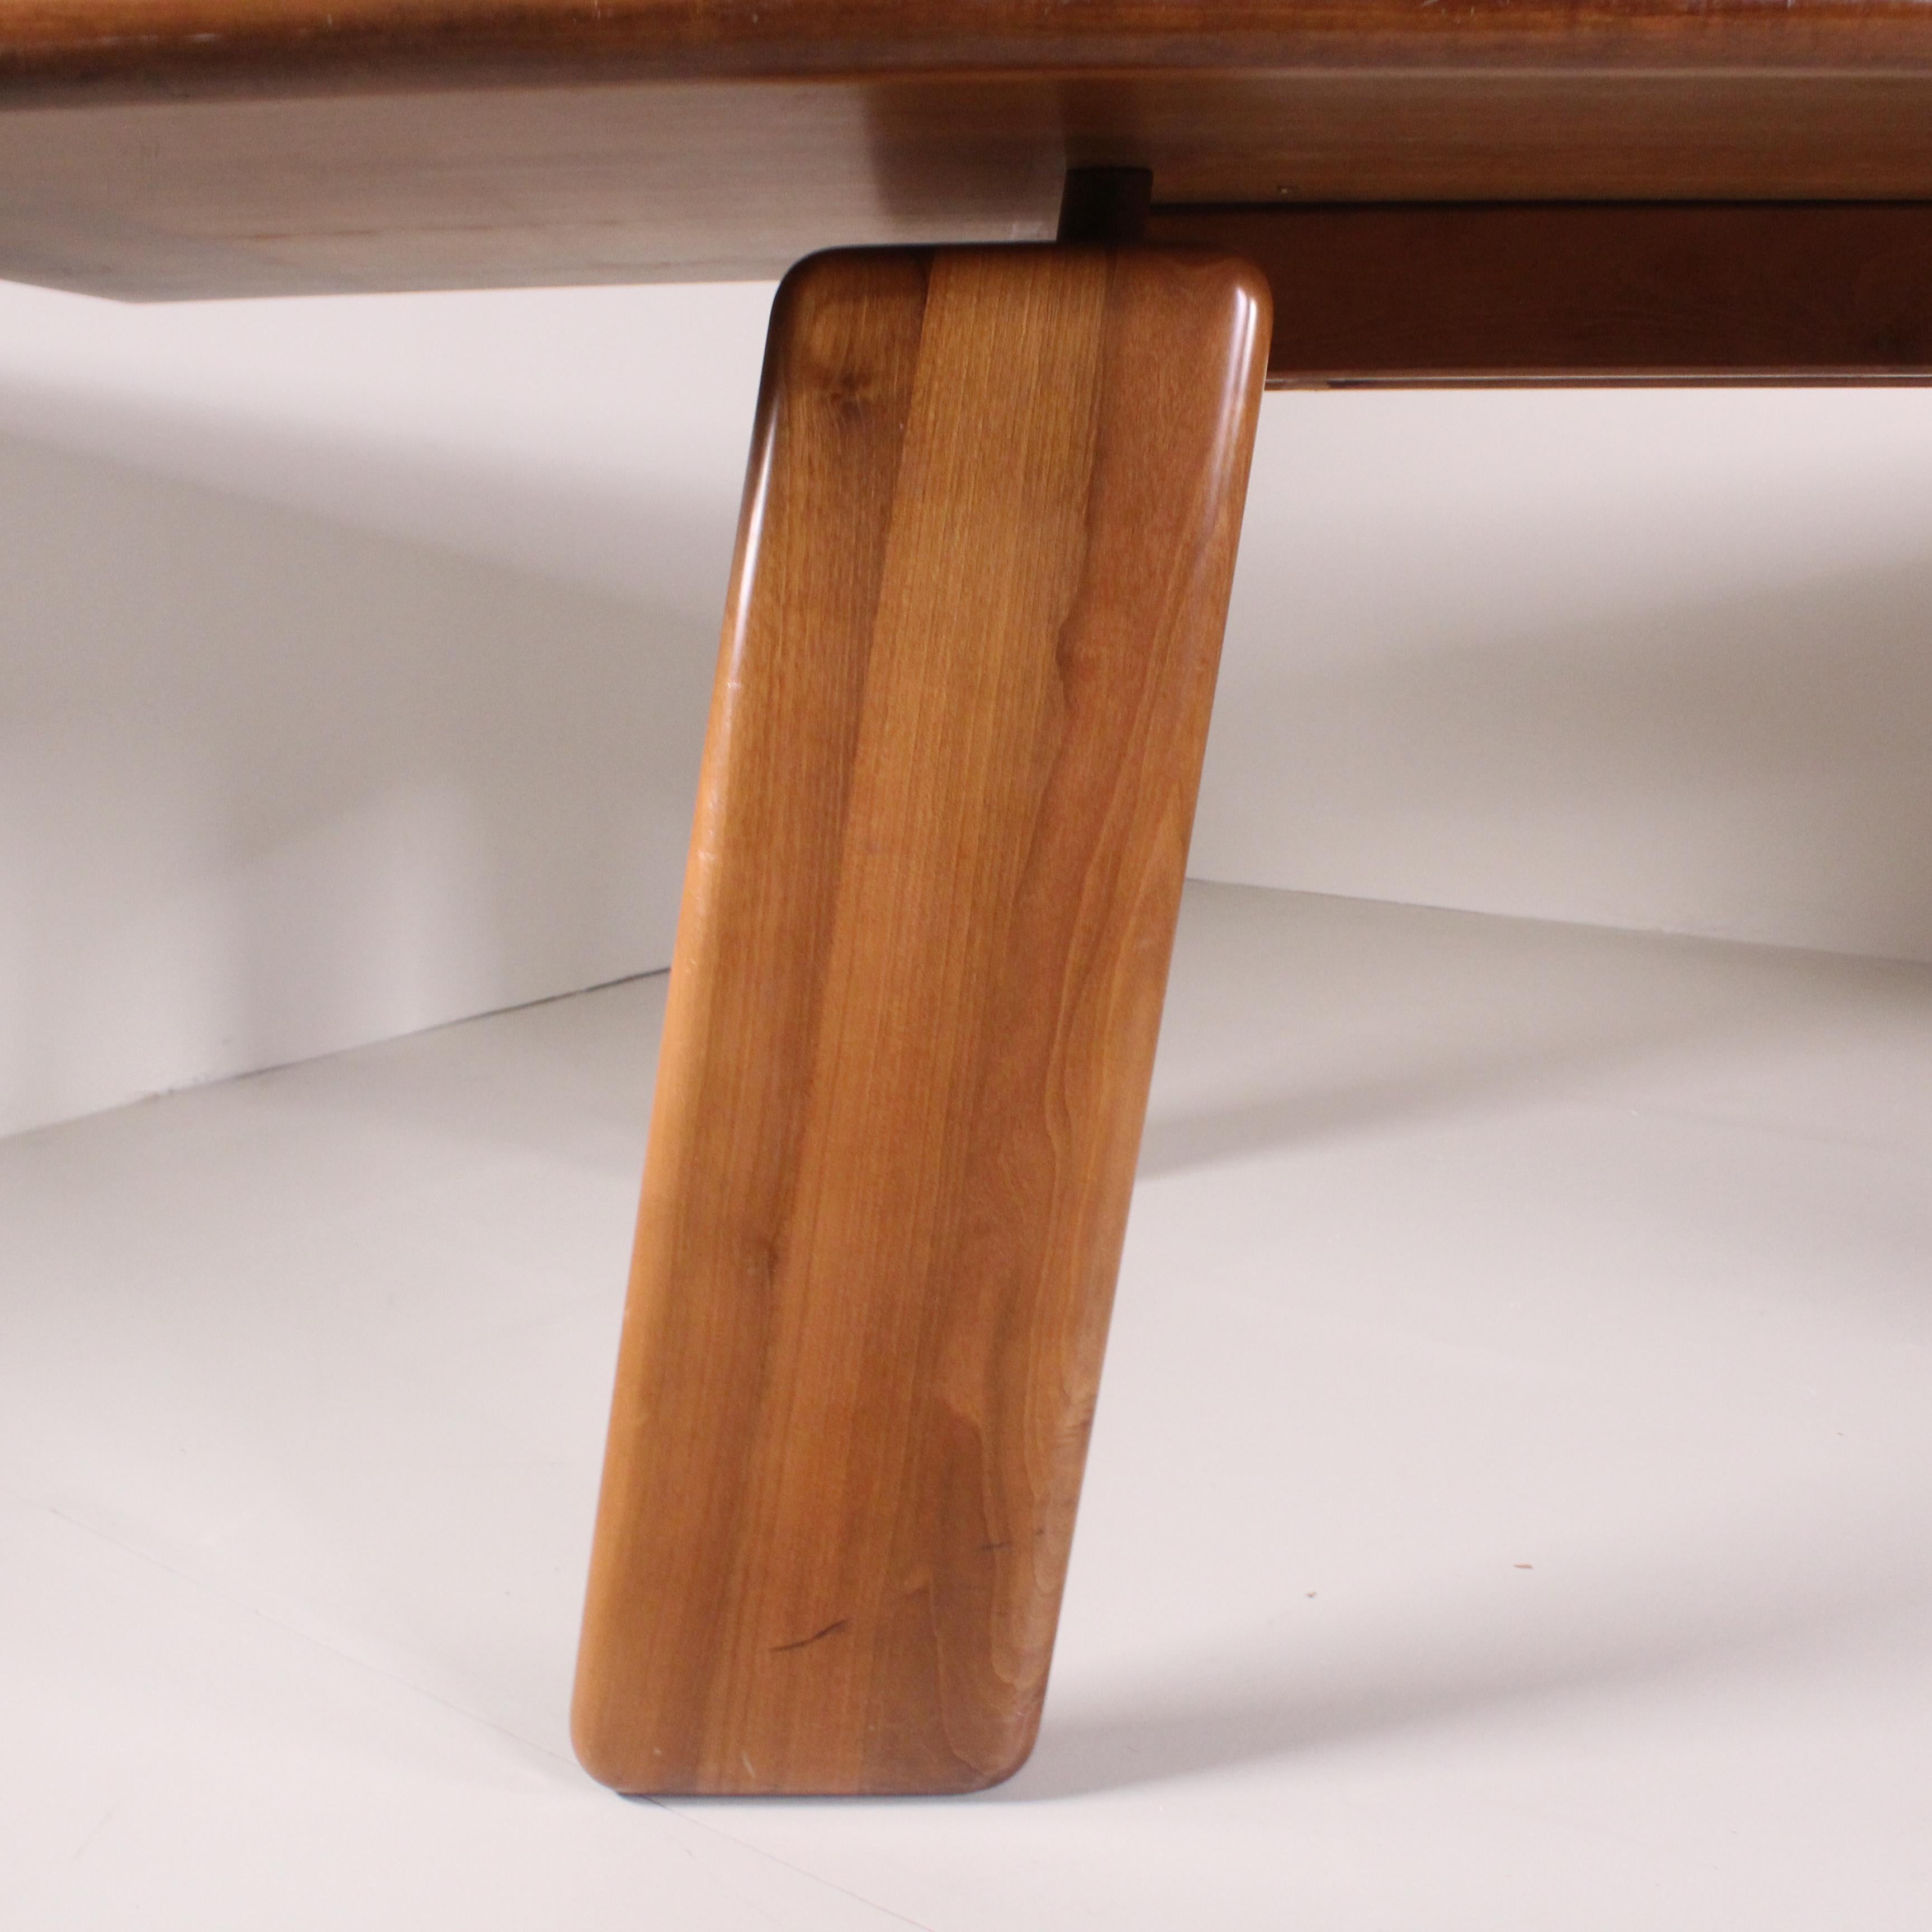 Wood  Tavolo di legno, Mario Marenco, MobilGirgi, 1960